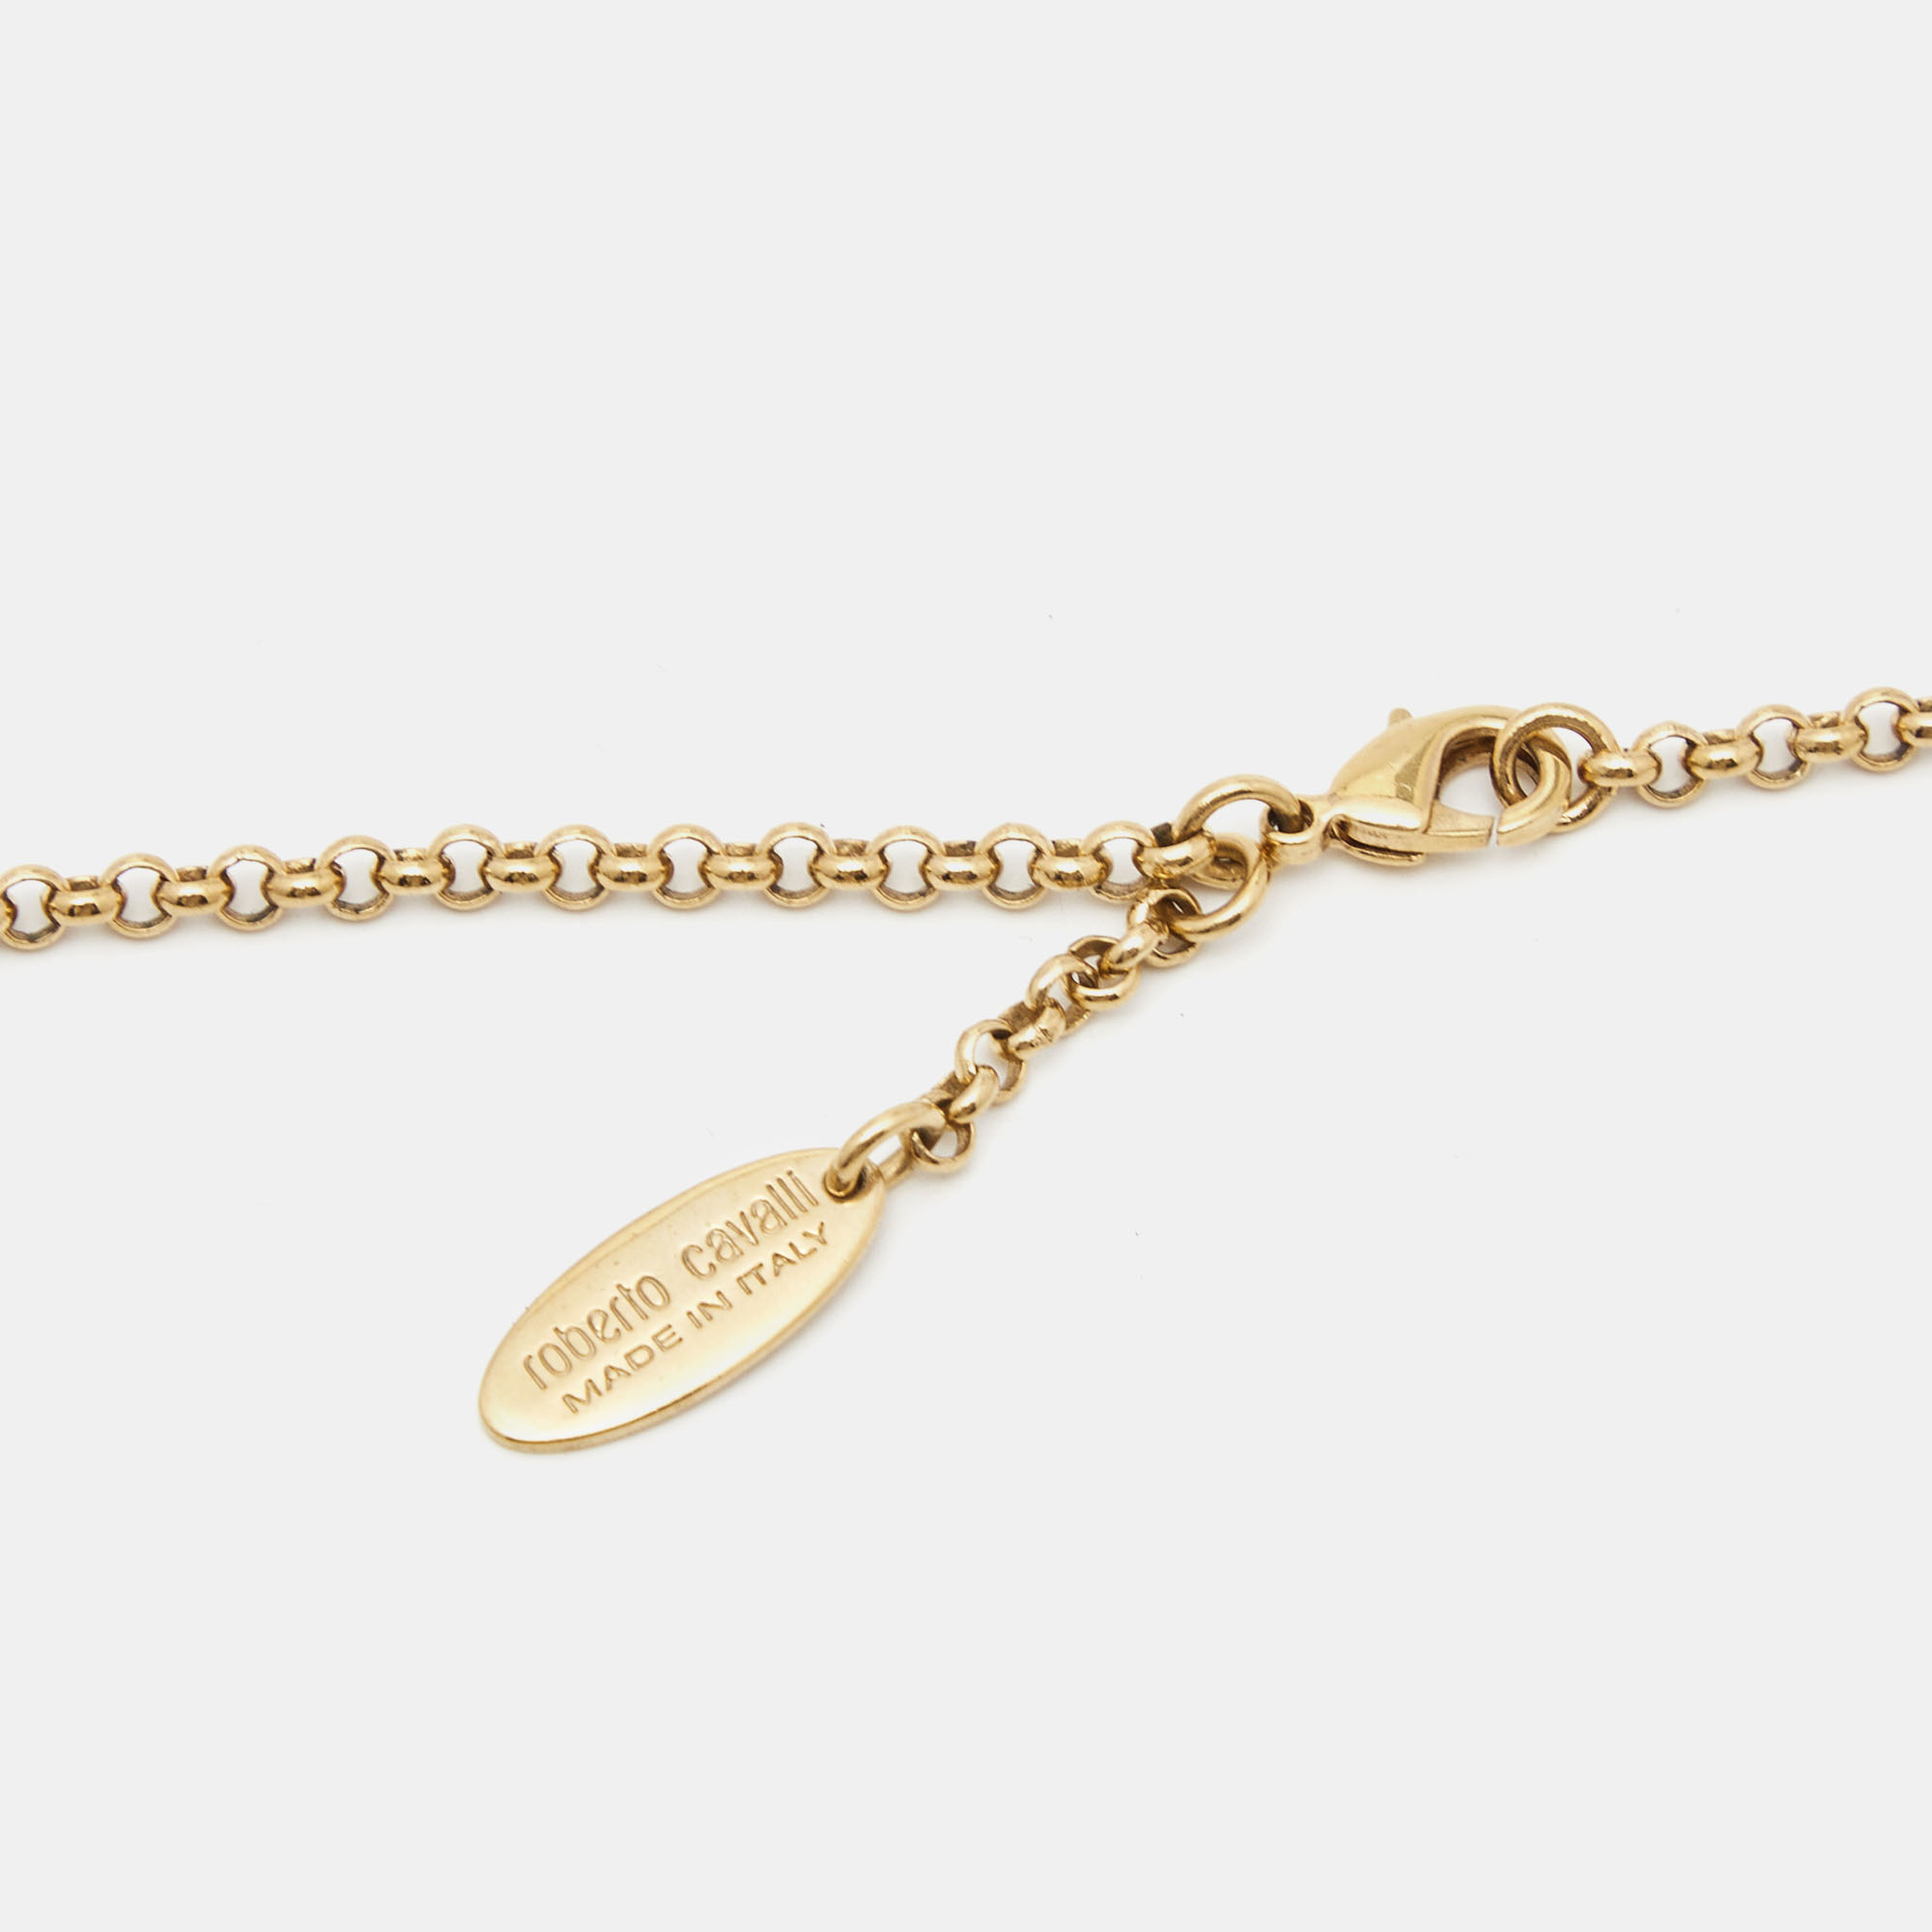 Robero Cavalli Heart Crystals Gold Tone Necklace